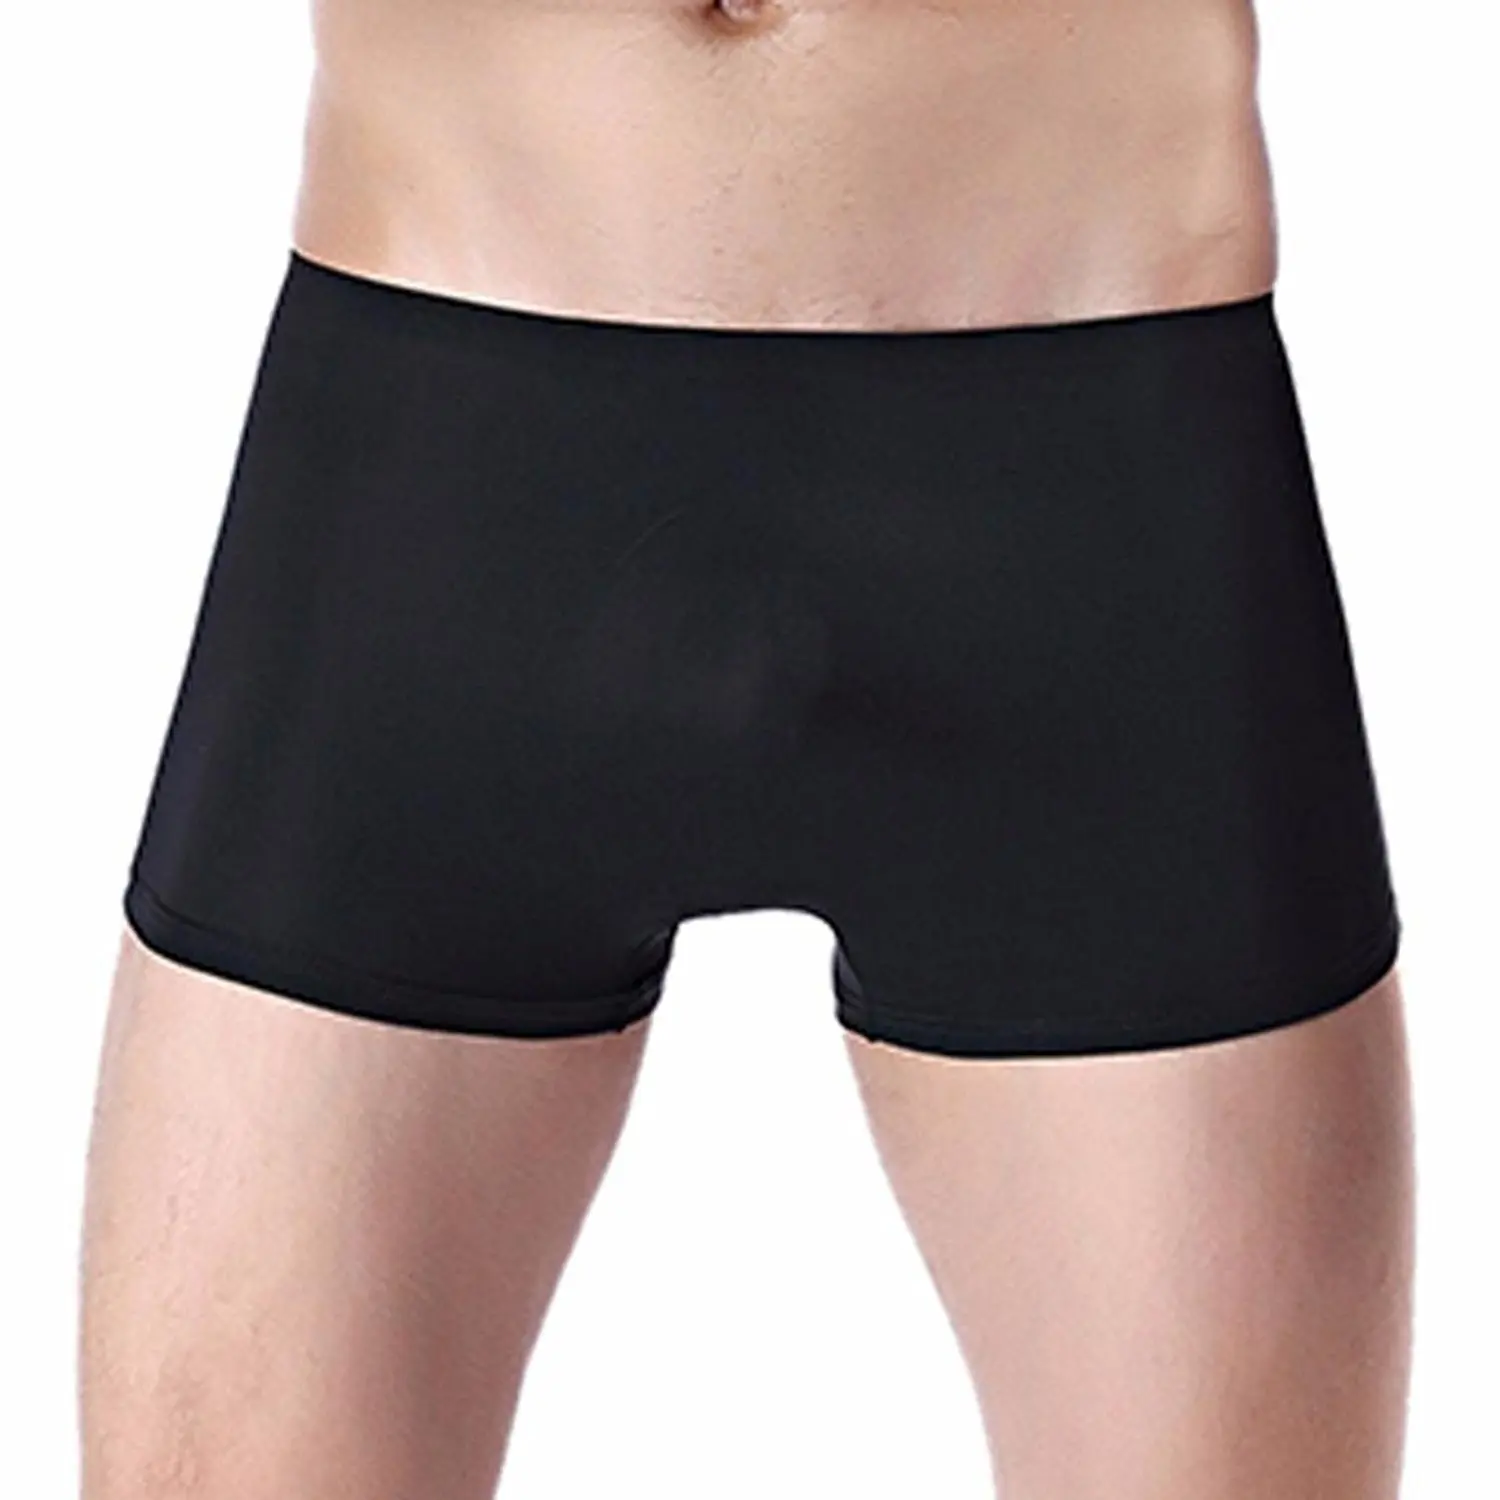 XL, Red TM Mens Bikini Underwear, Ultra-Thin Breathable Soft Boxer Briefs Bulge Pouch HP95